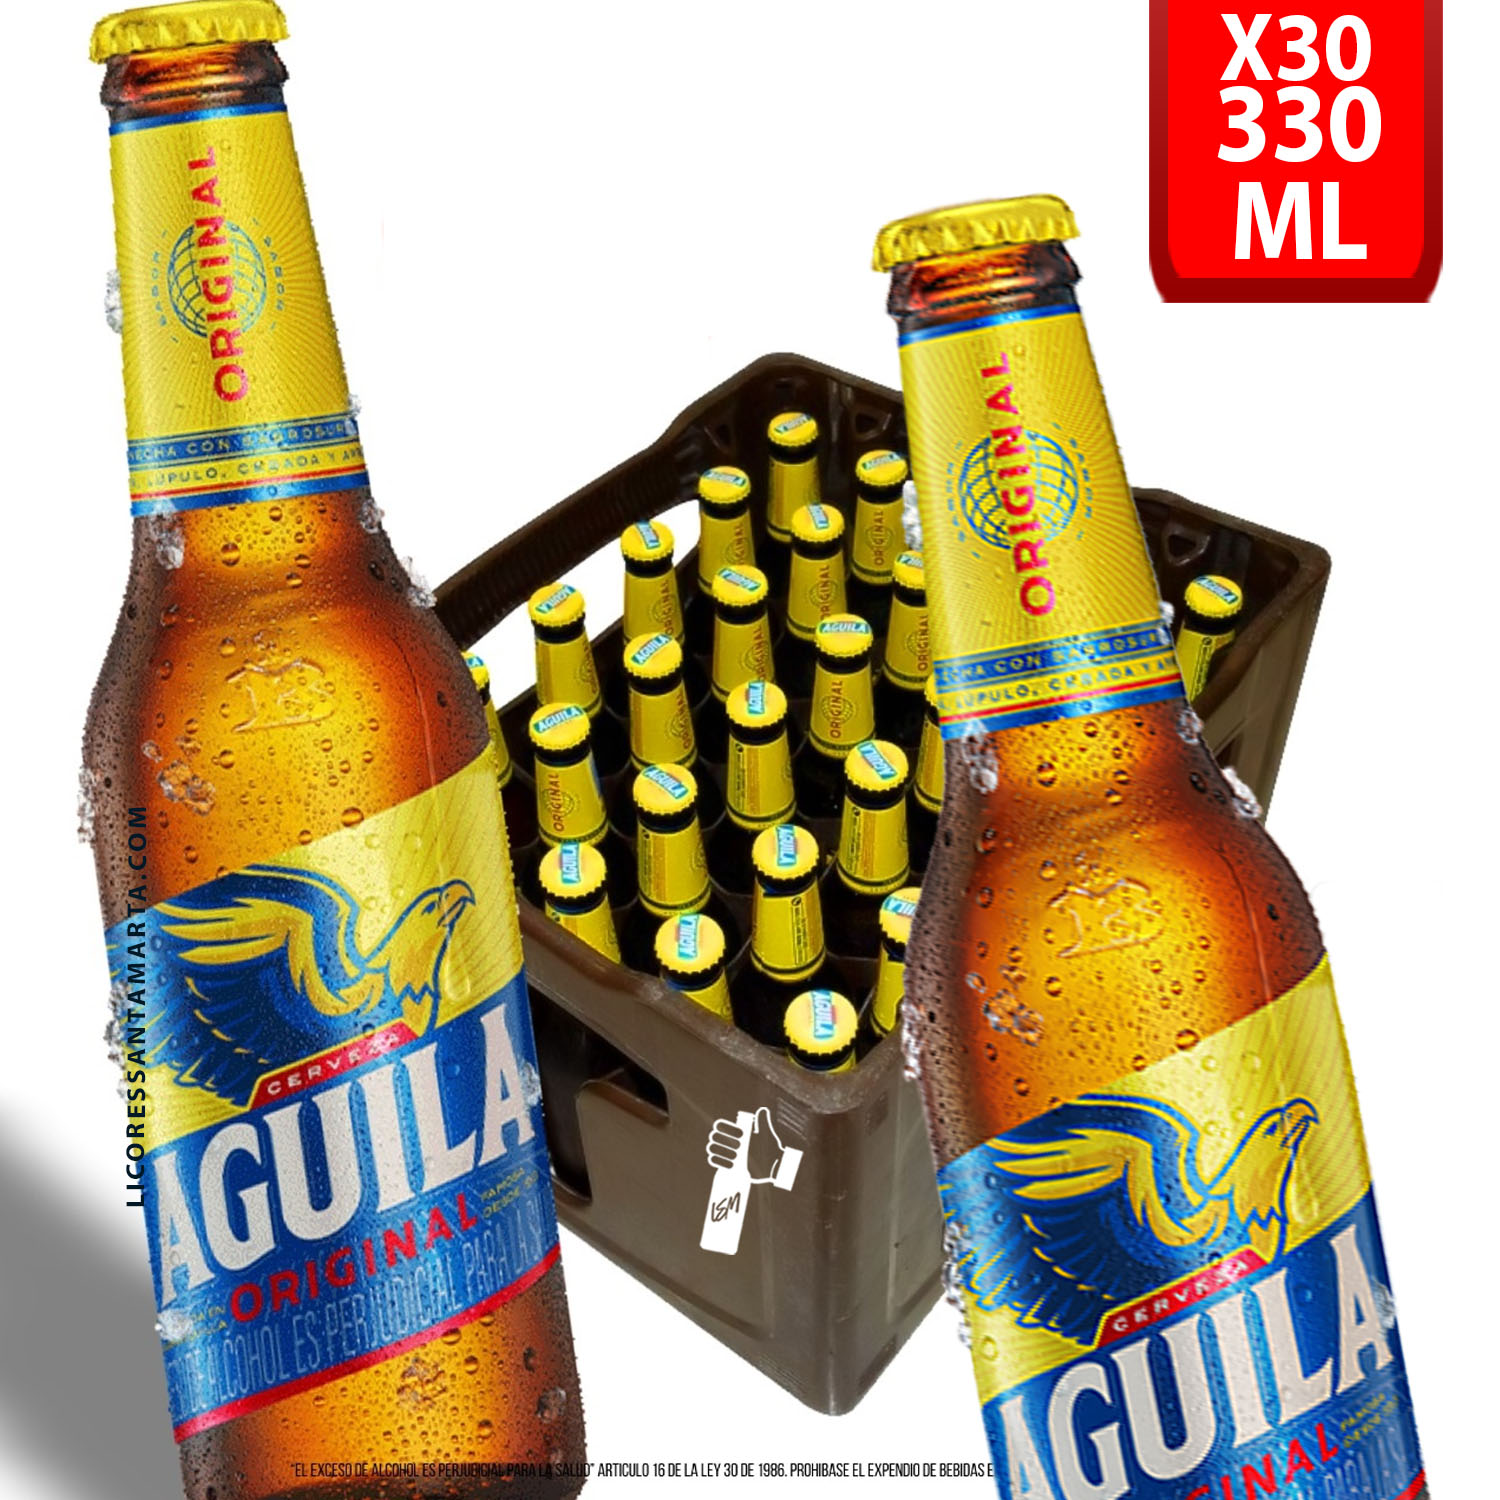 Top 105+ imagen aguila negra cerveza colombia